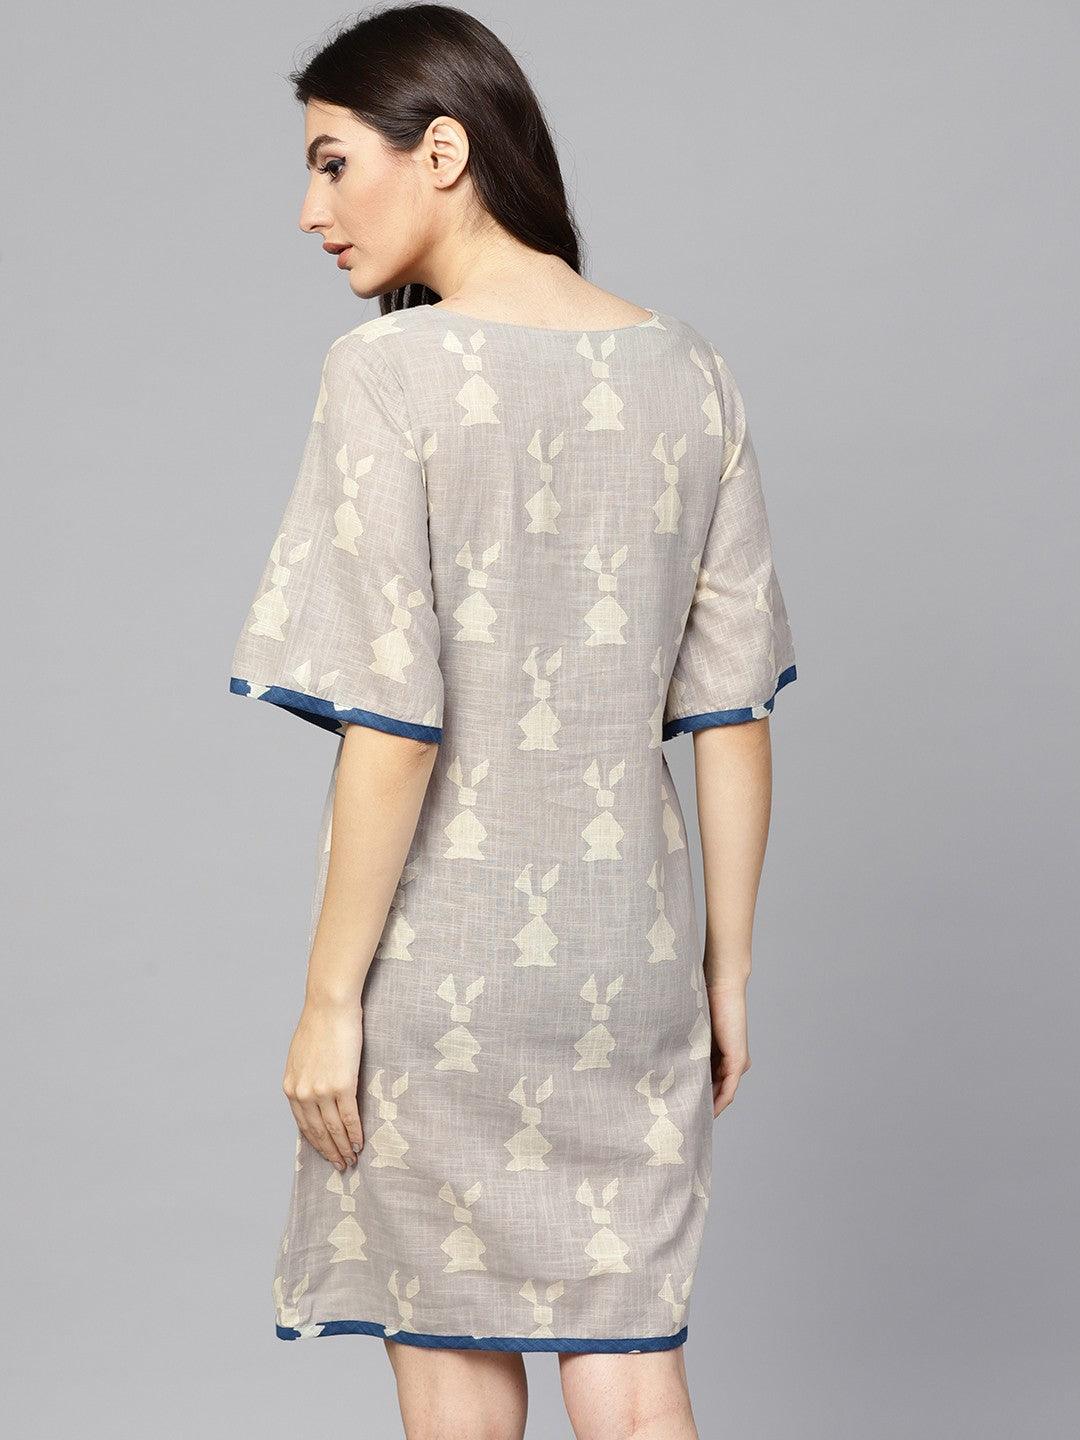 Beige Dabu Printed A-Line Dress (Fully Stitched) - Znxclothing